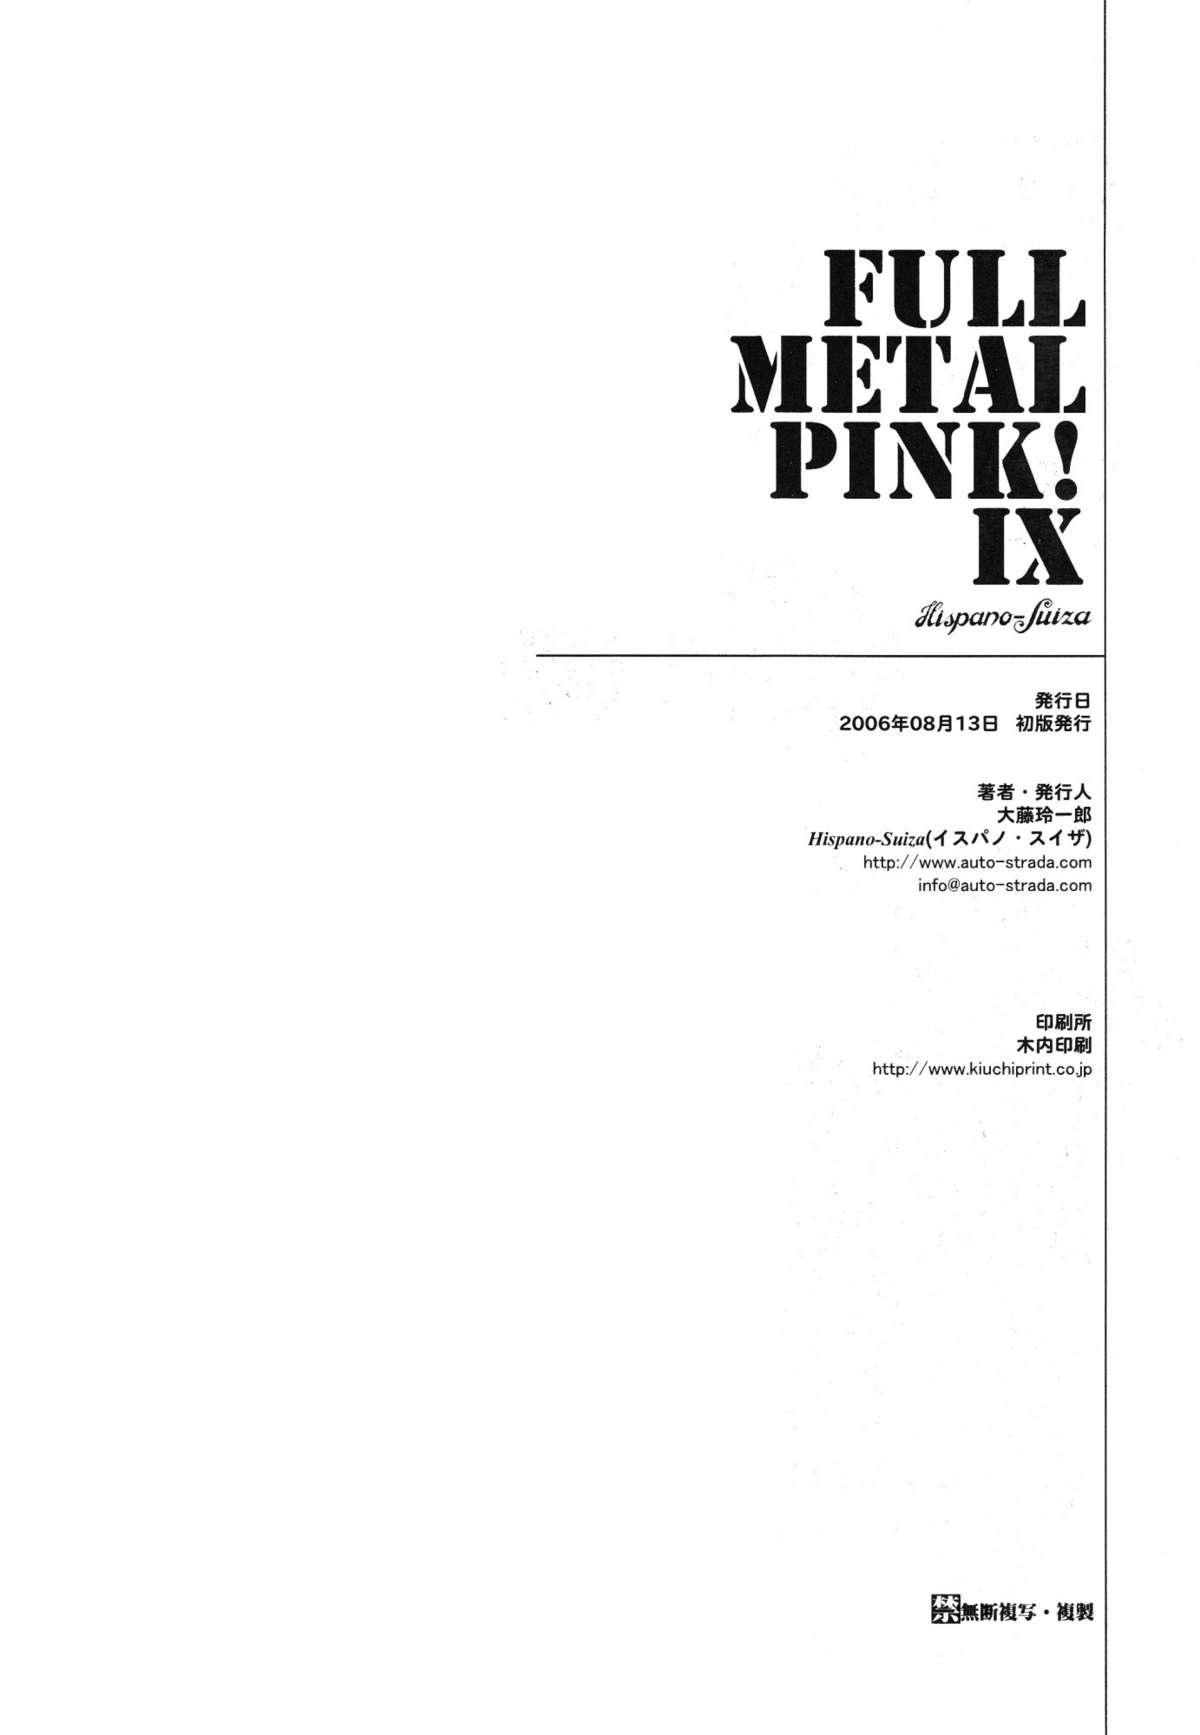 Full Metal Pink! IX 16